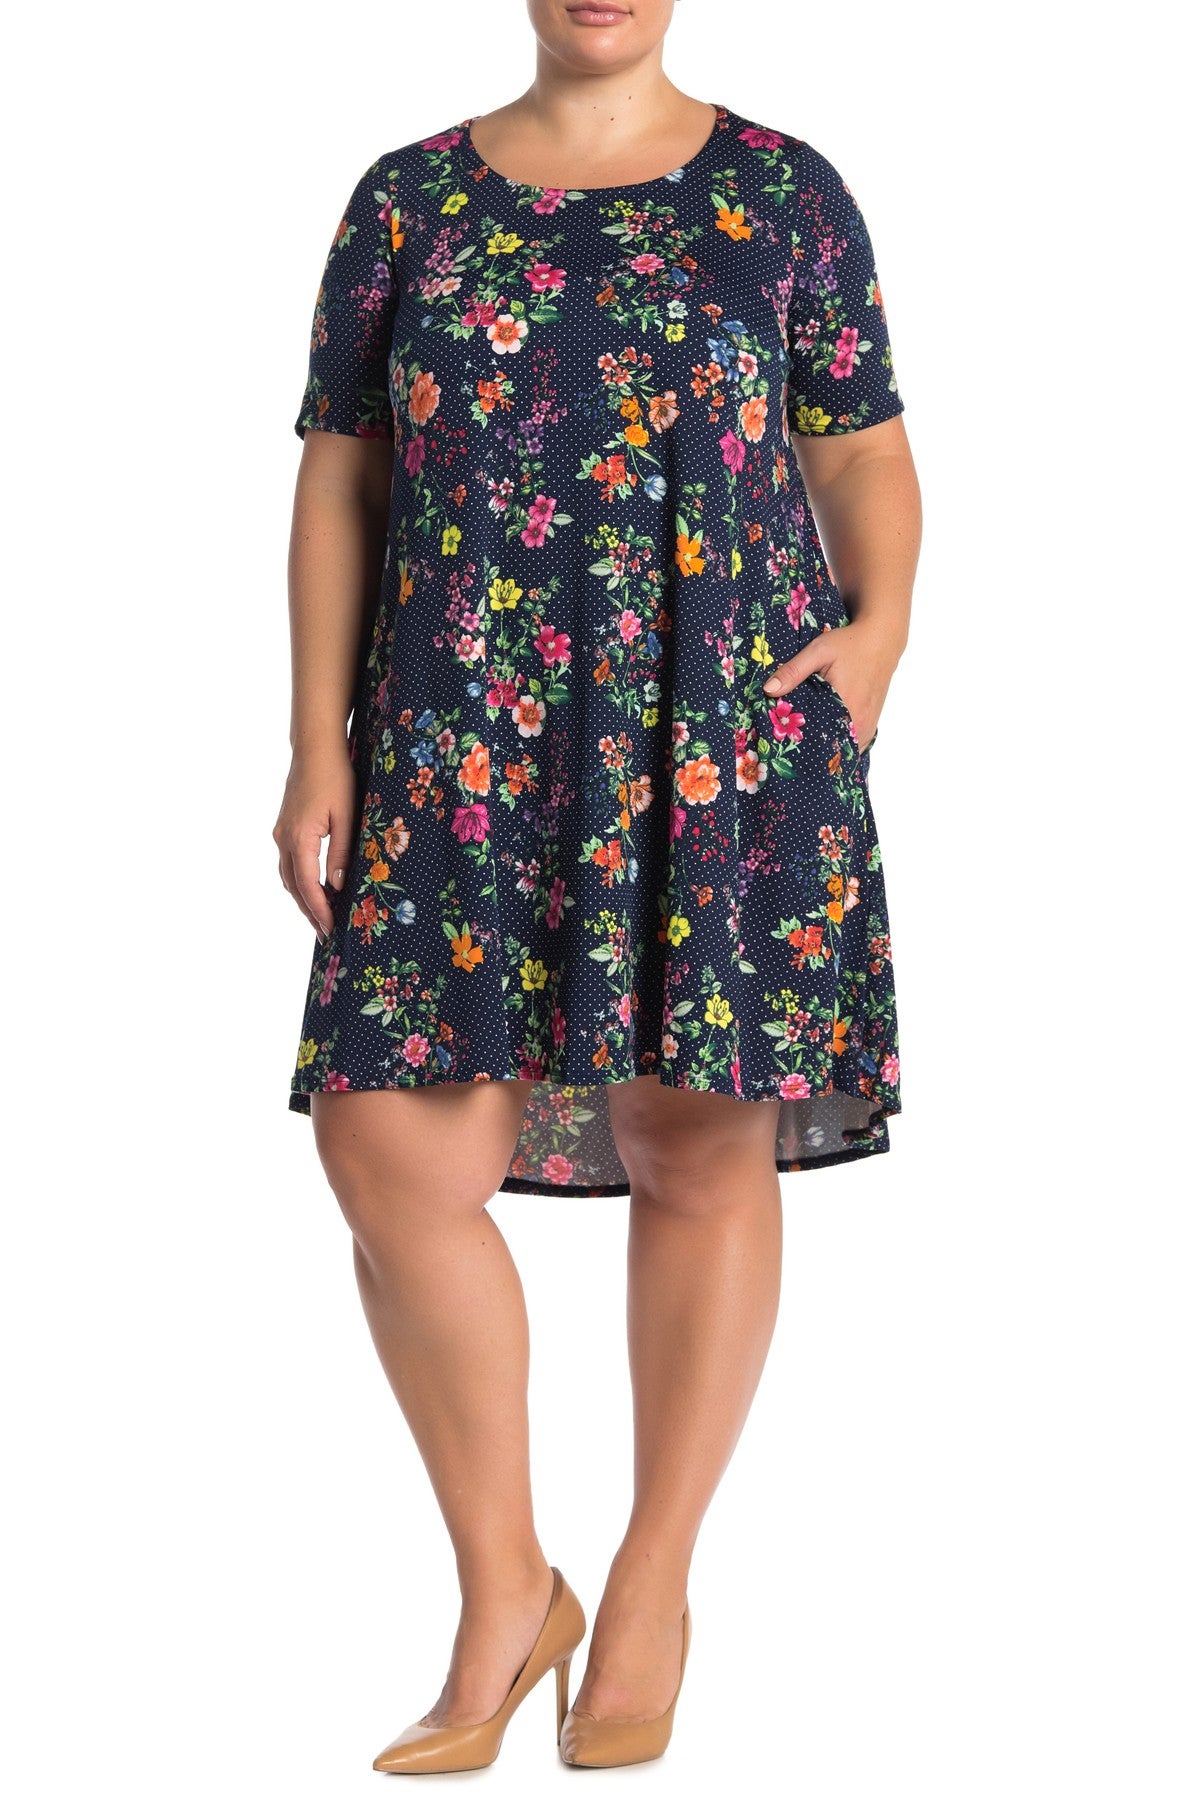 Nina Leonard + Scoop Neck Short Sleeve Printed Dress (Plus Size)